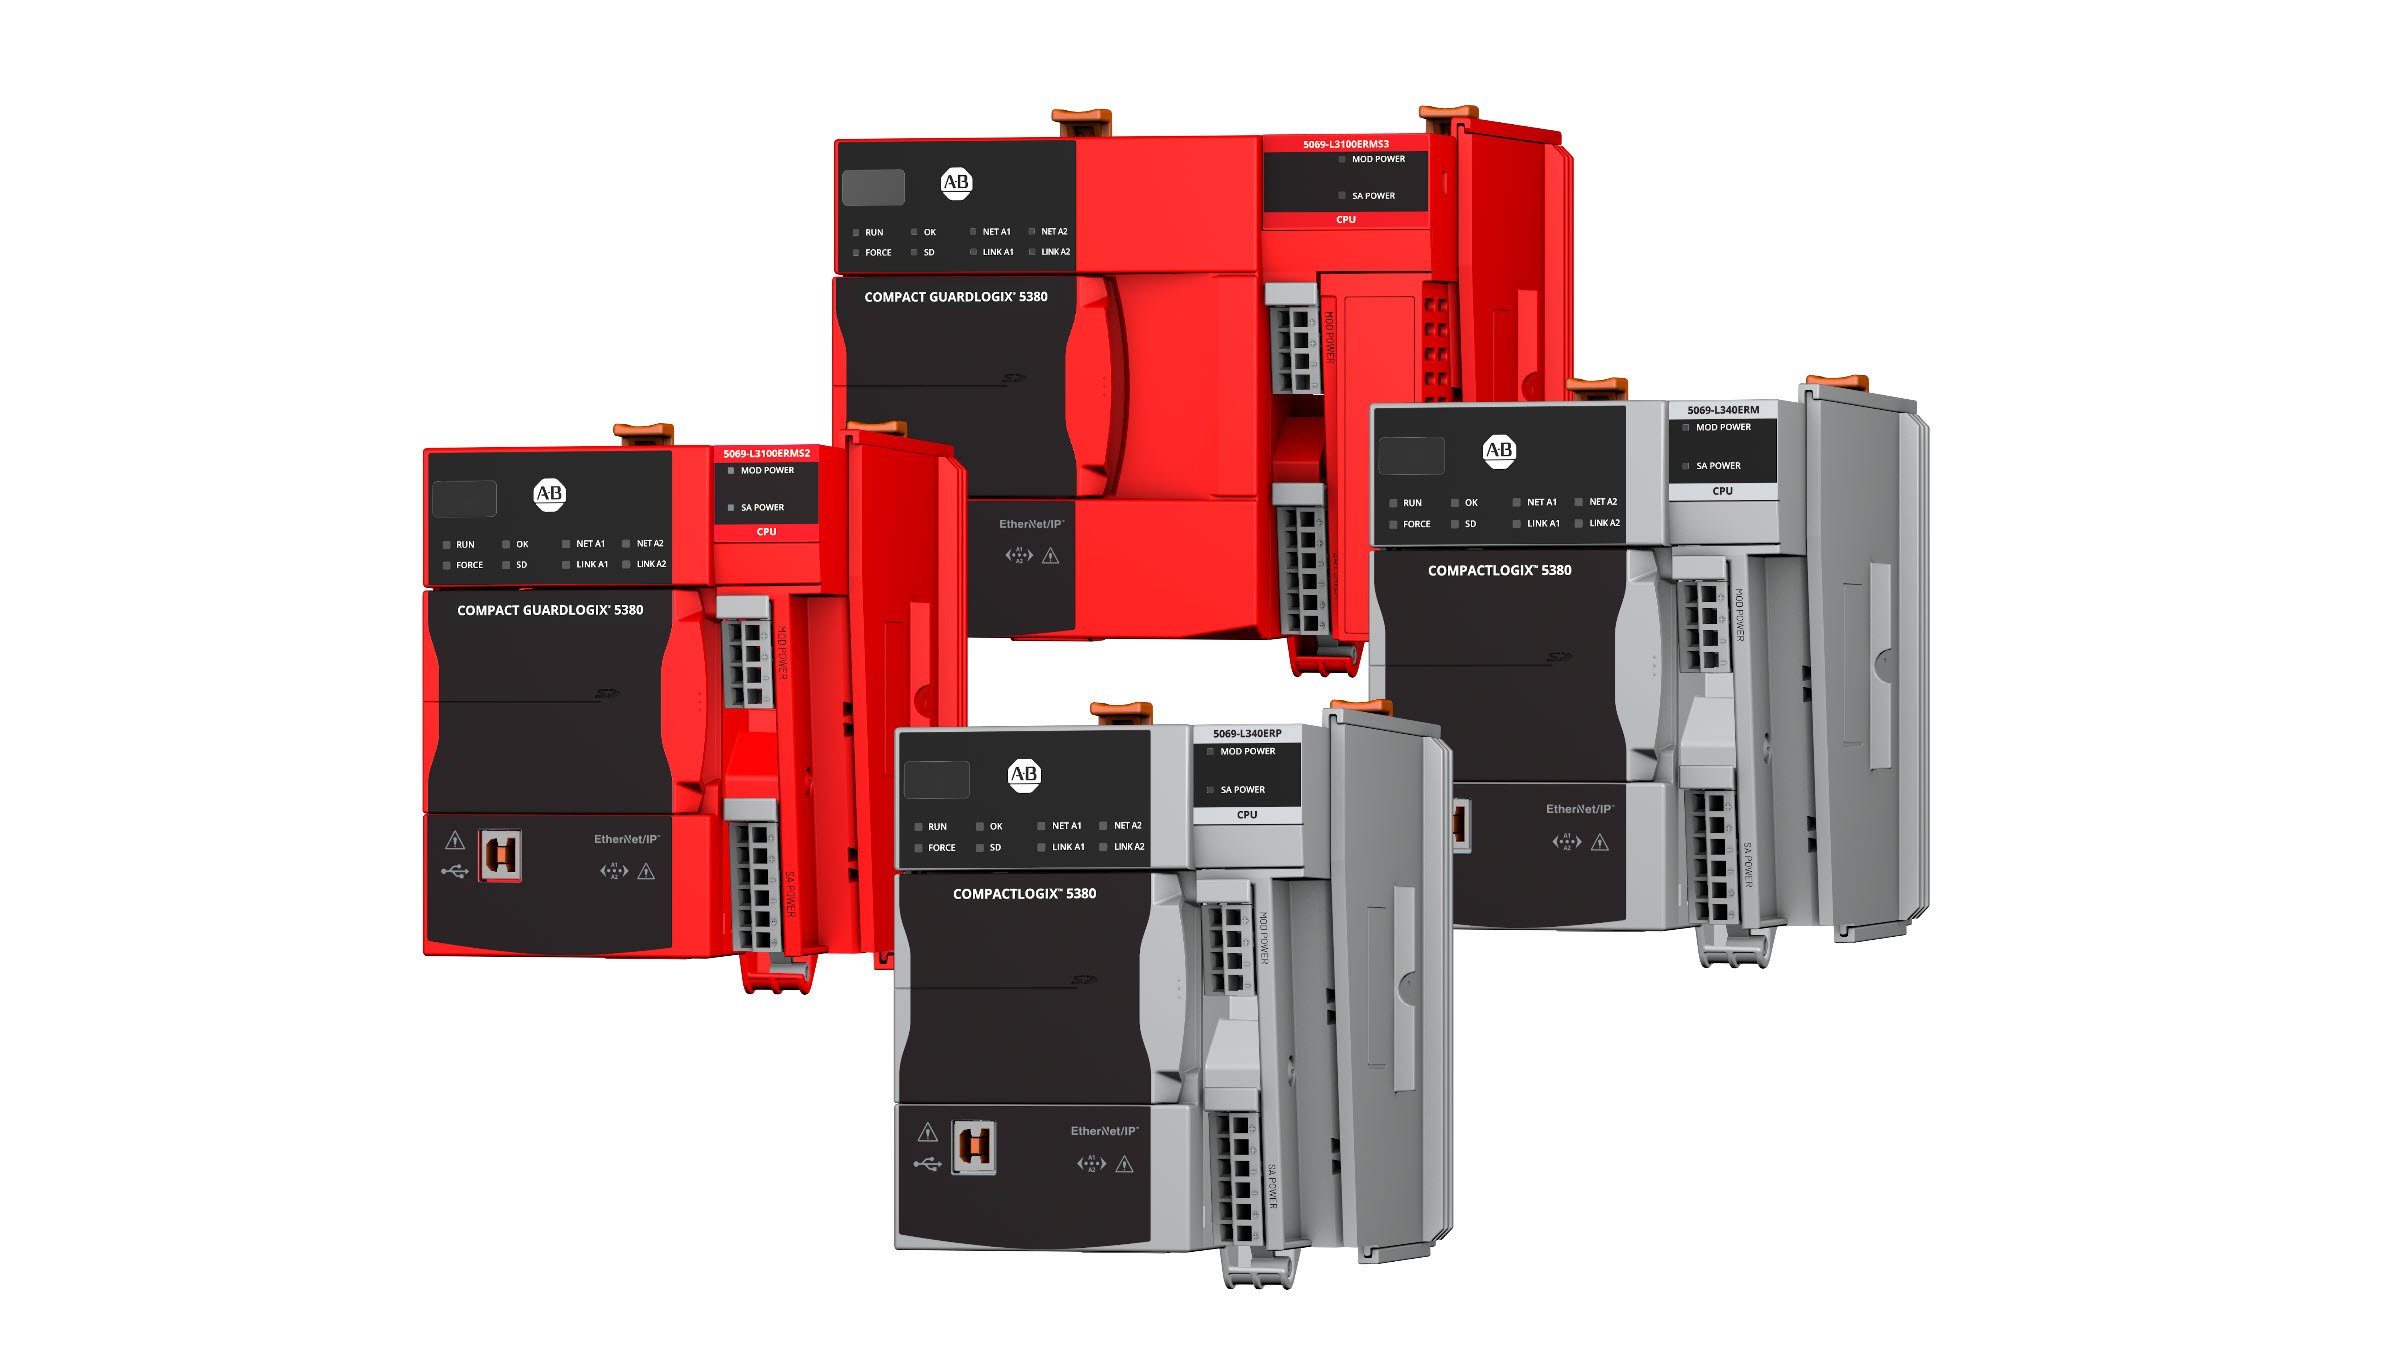 一批紧凑型 GuardLogix 5380 与 CompactLogix 5380 控制器。目录 5069-L3100ERMS3、5069-L3100ERMS2、5069-L340ERM 与 5069-L340ERP。